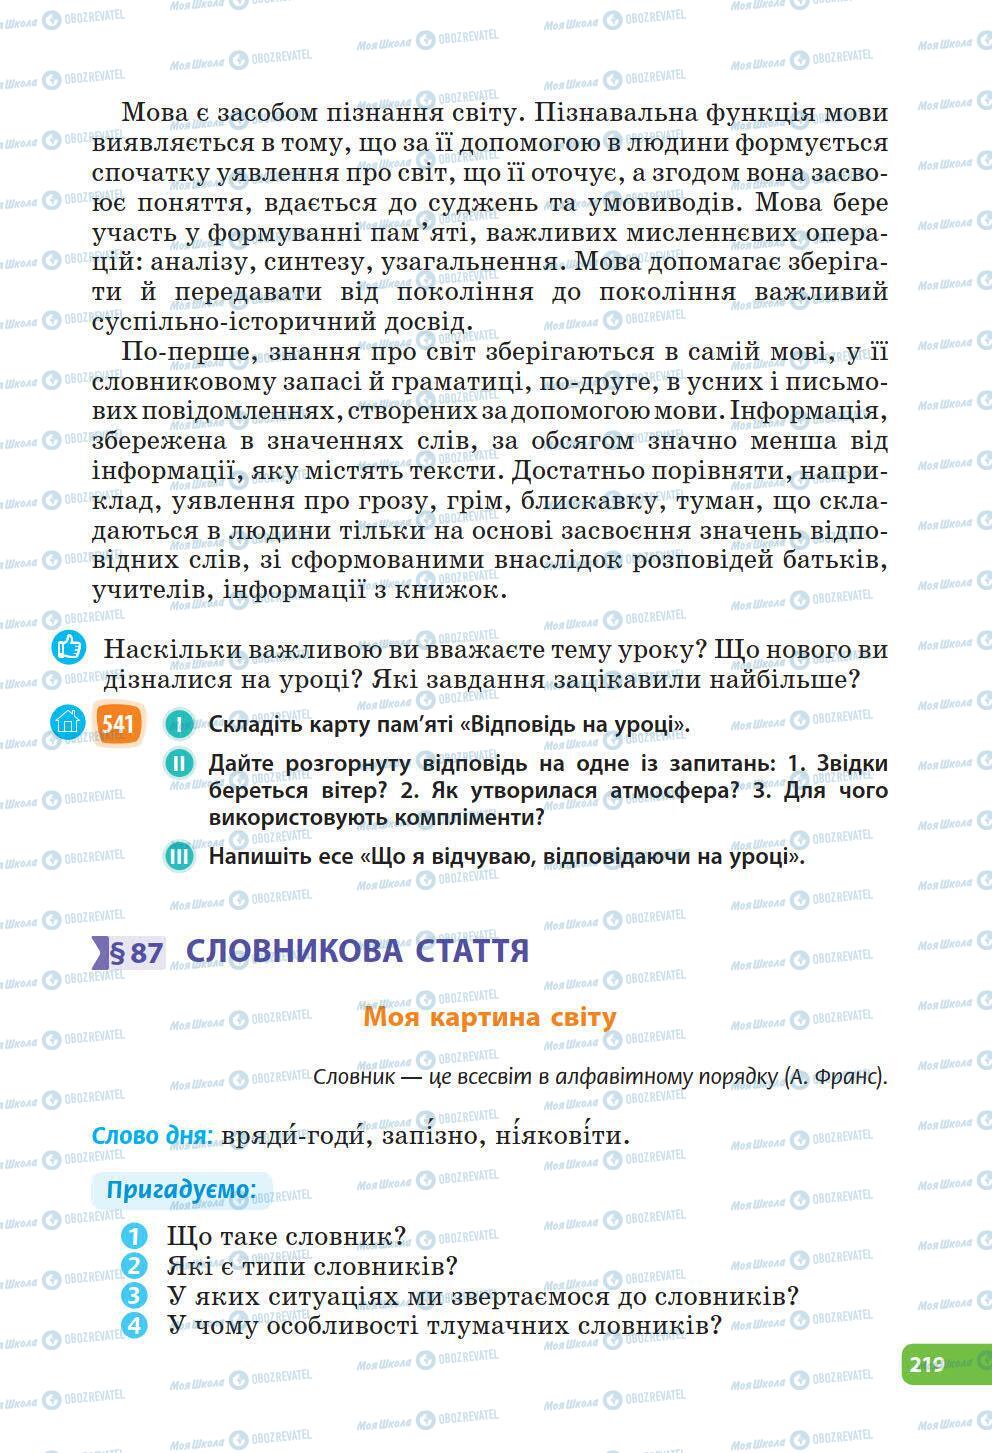 Учебники Укр мова 6 класс страница 219